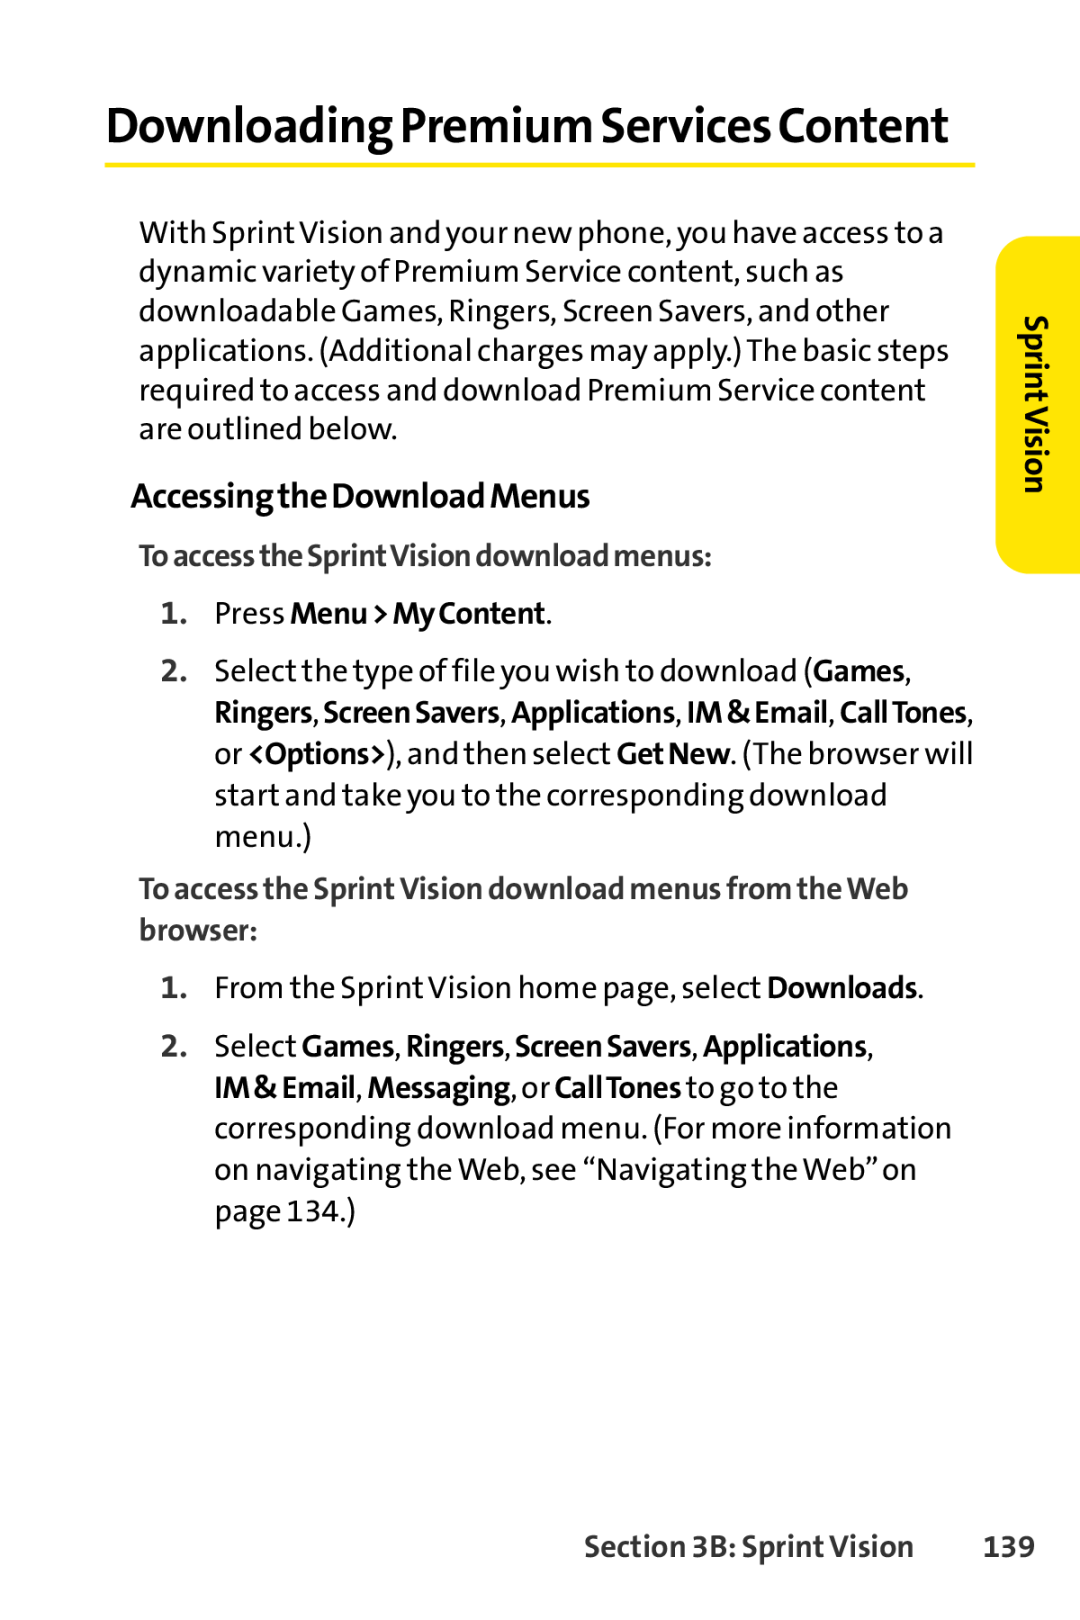 Sprint Nextel LX160 DownloadingPremium Services Content, AccessingtheDownloadMenus, ToaccesstheSprintVisiondownloadmenus 